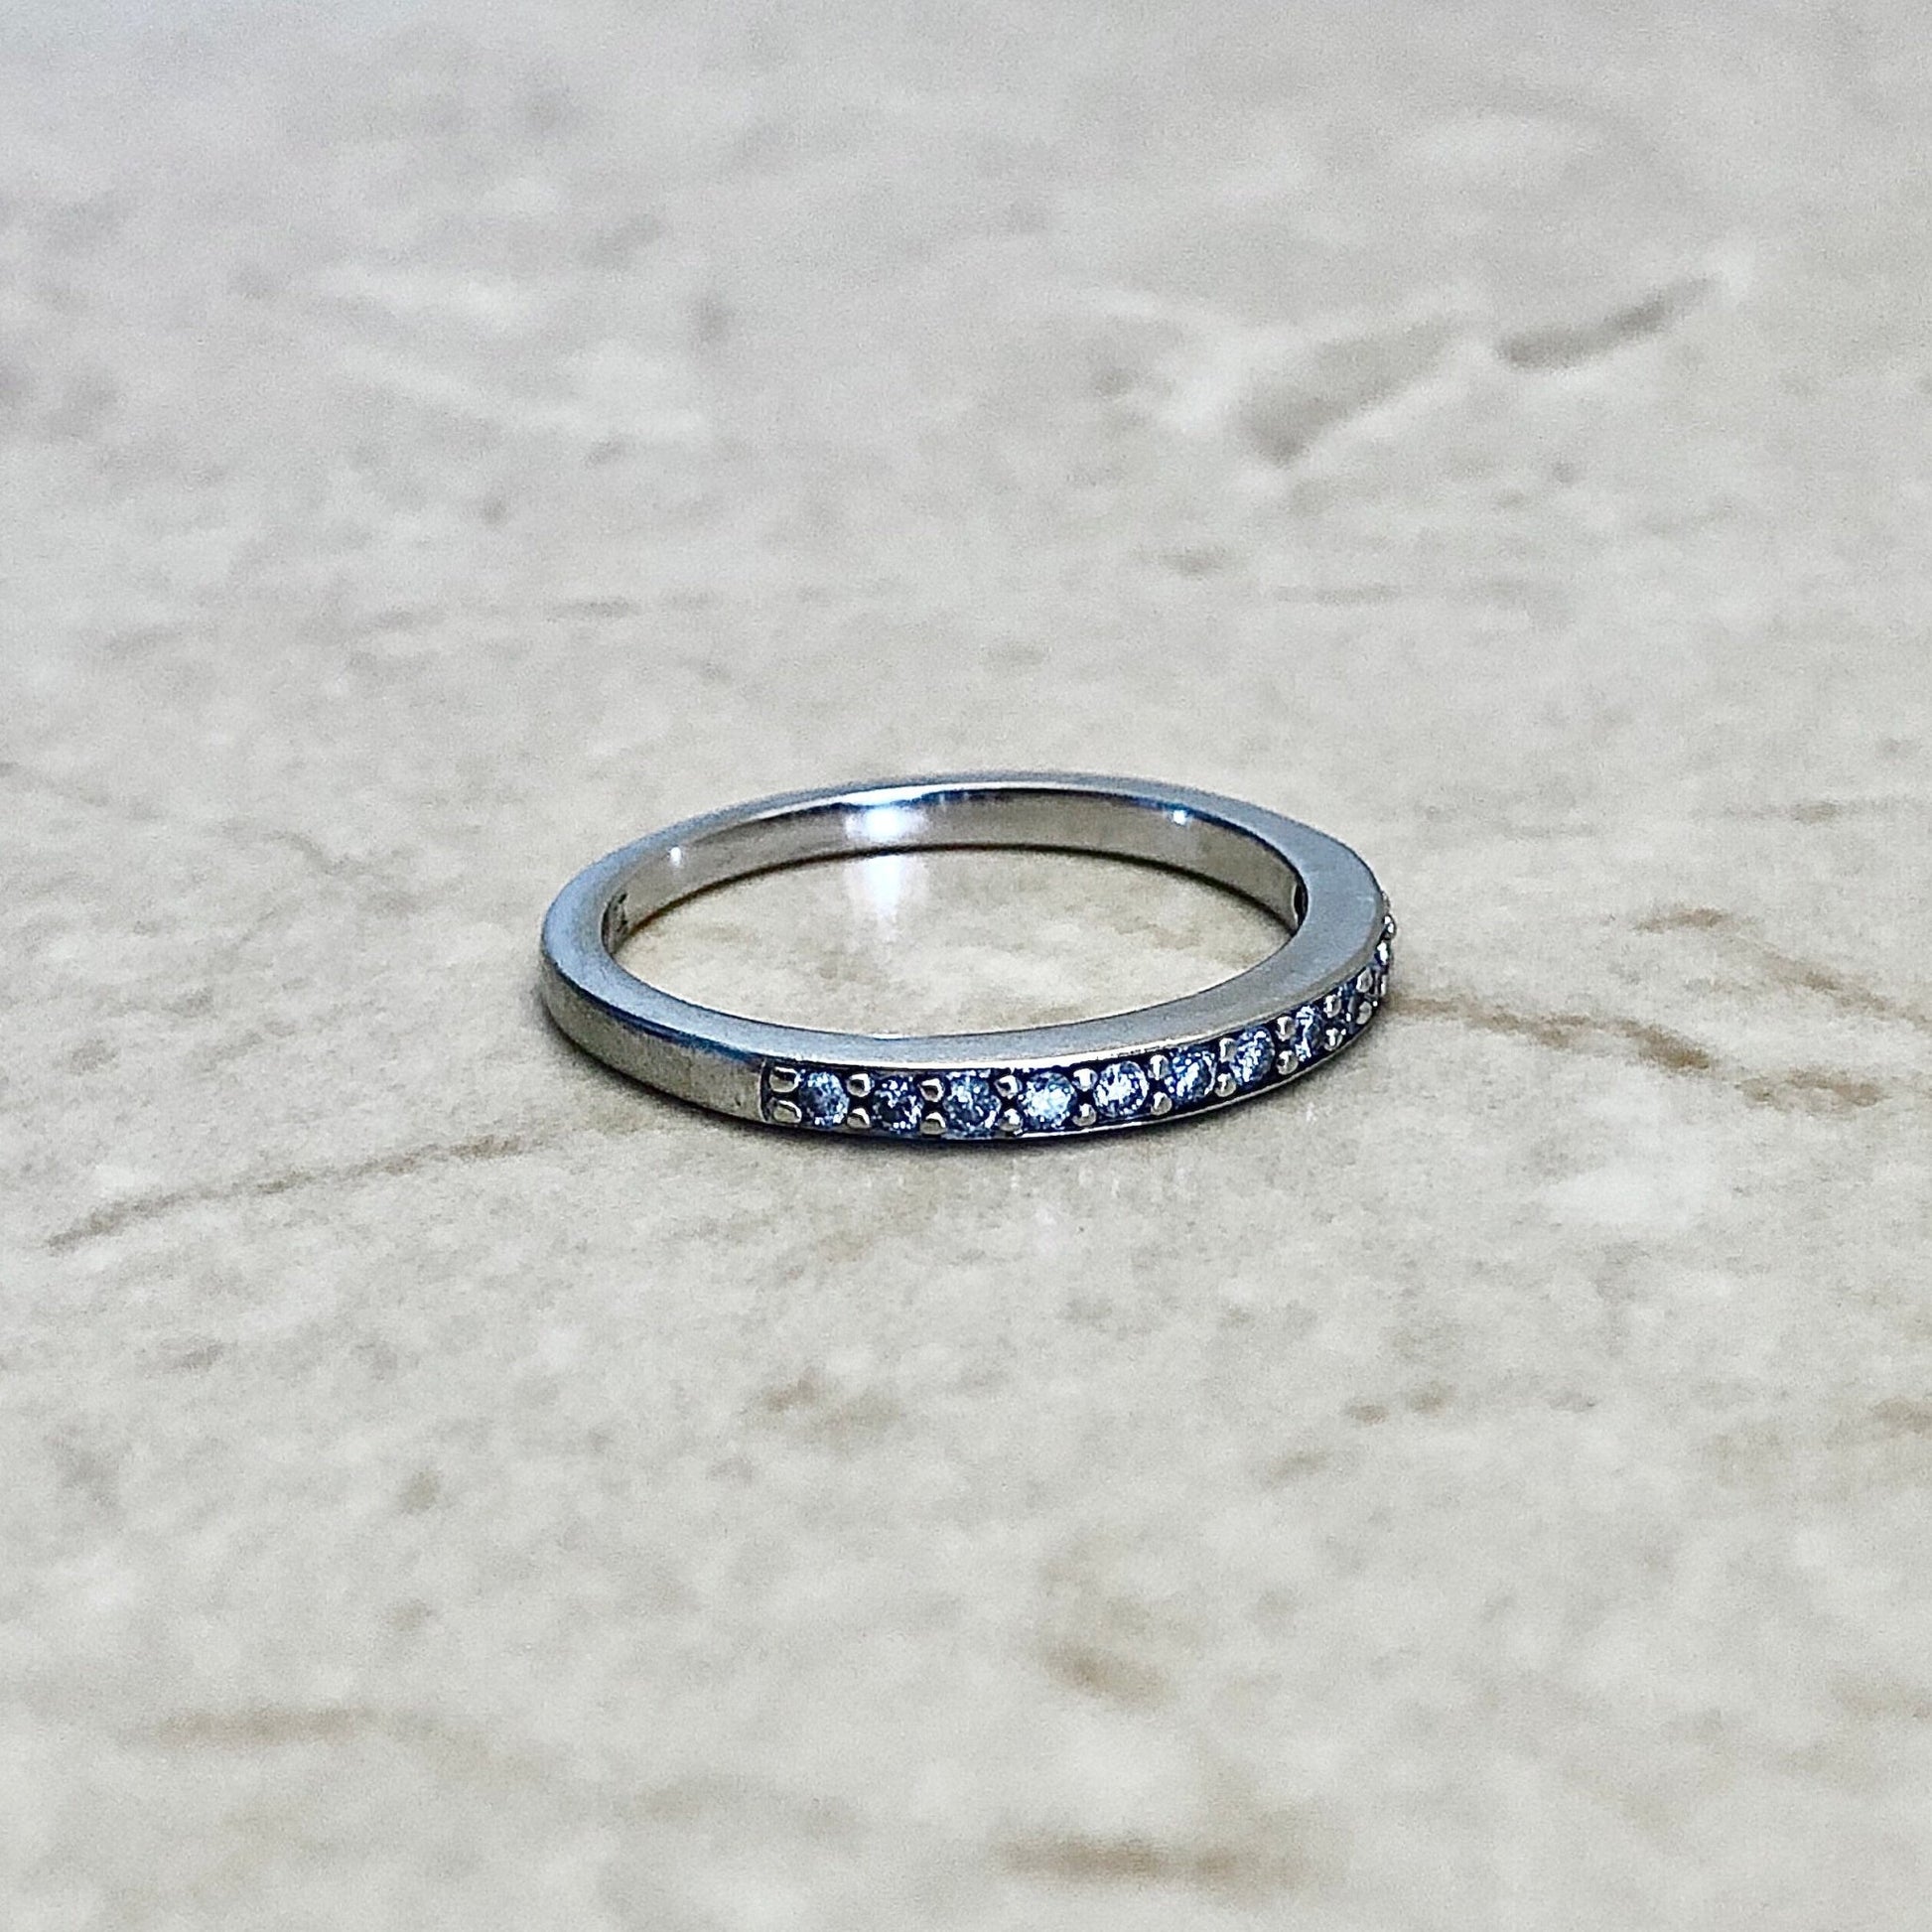 14K Half Eternity Diamond Band Ring - White Gold Eternity Ring - Anniversary Ring - April Birthstone Gift - Size 5 US